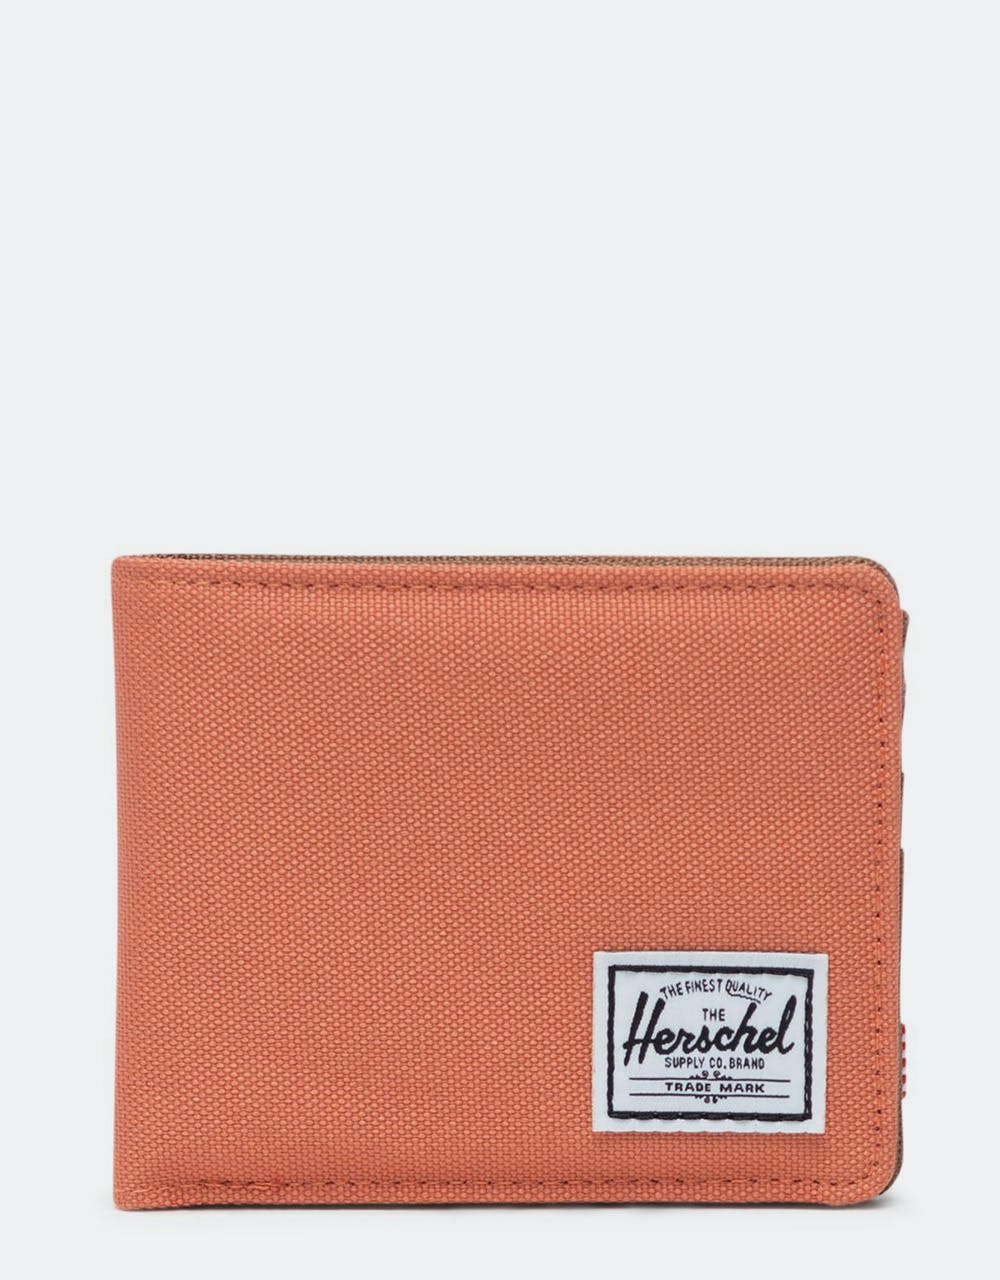 Herschel Supply Co. Roy RFID Wallet - Apricot Brandy/Saddle Brown